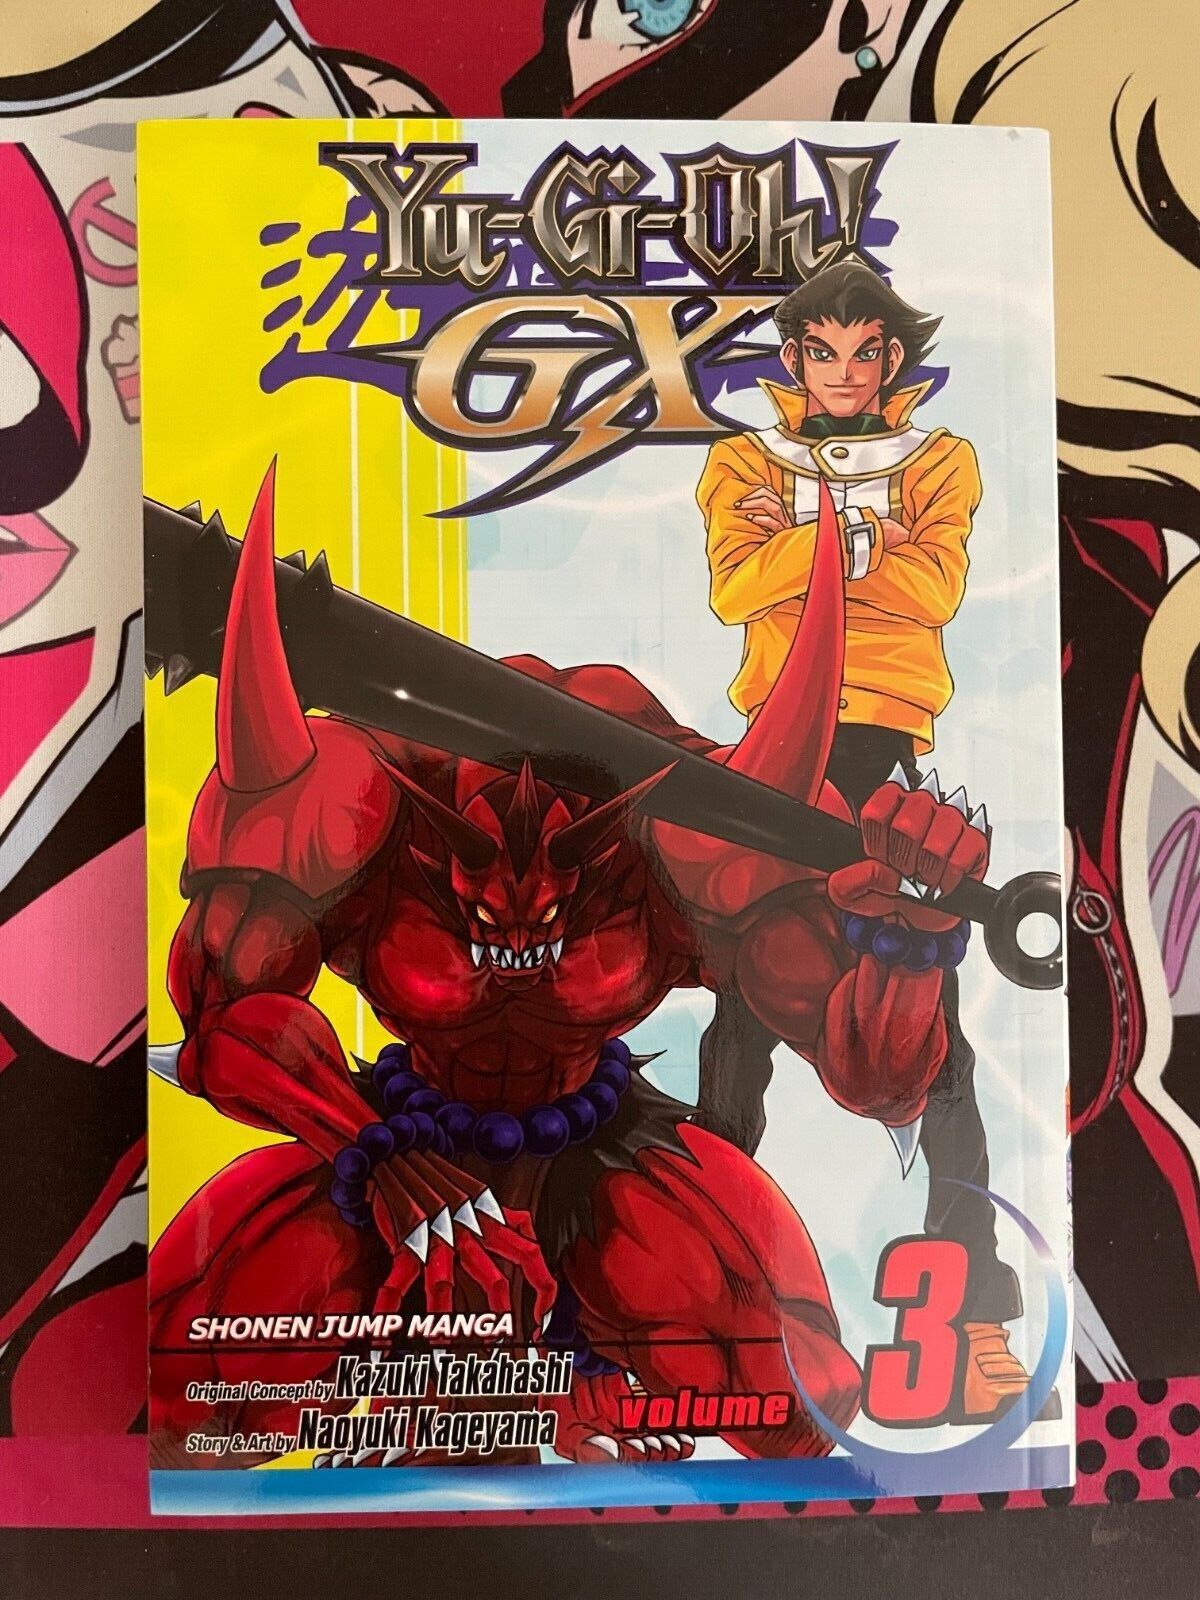 Yugioh GX, Manga, Volume 3, First print with promo card sealed